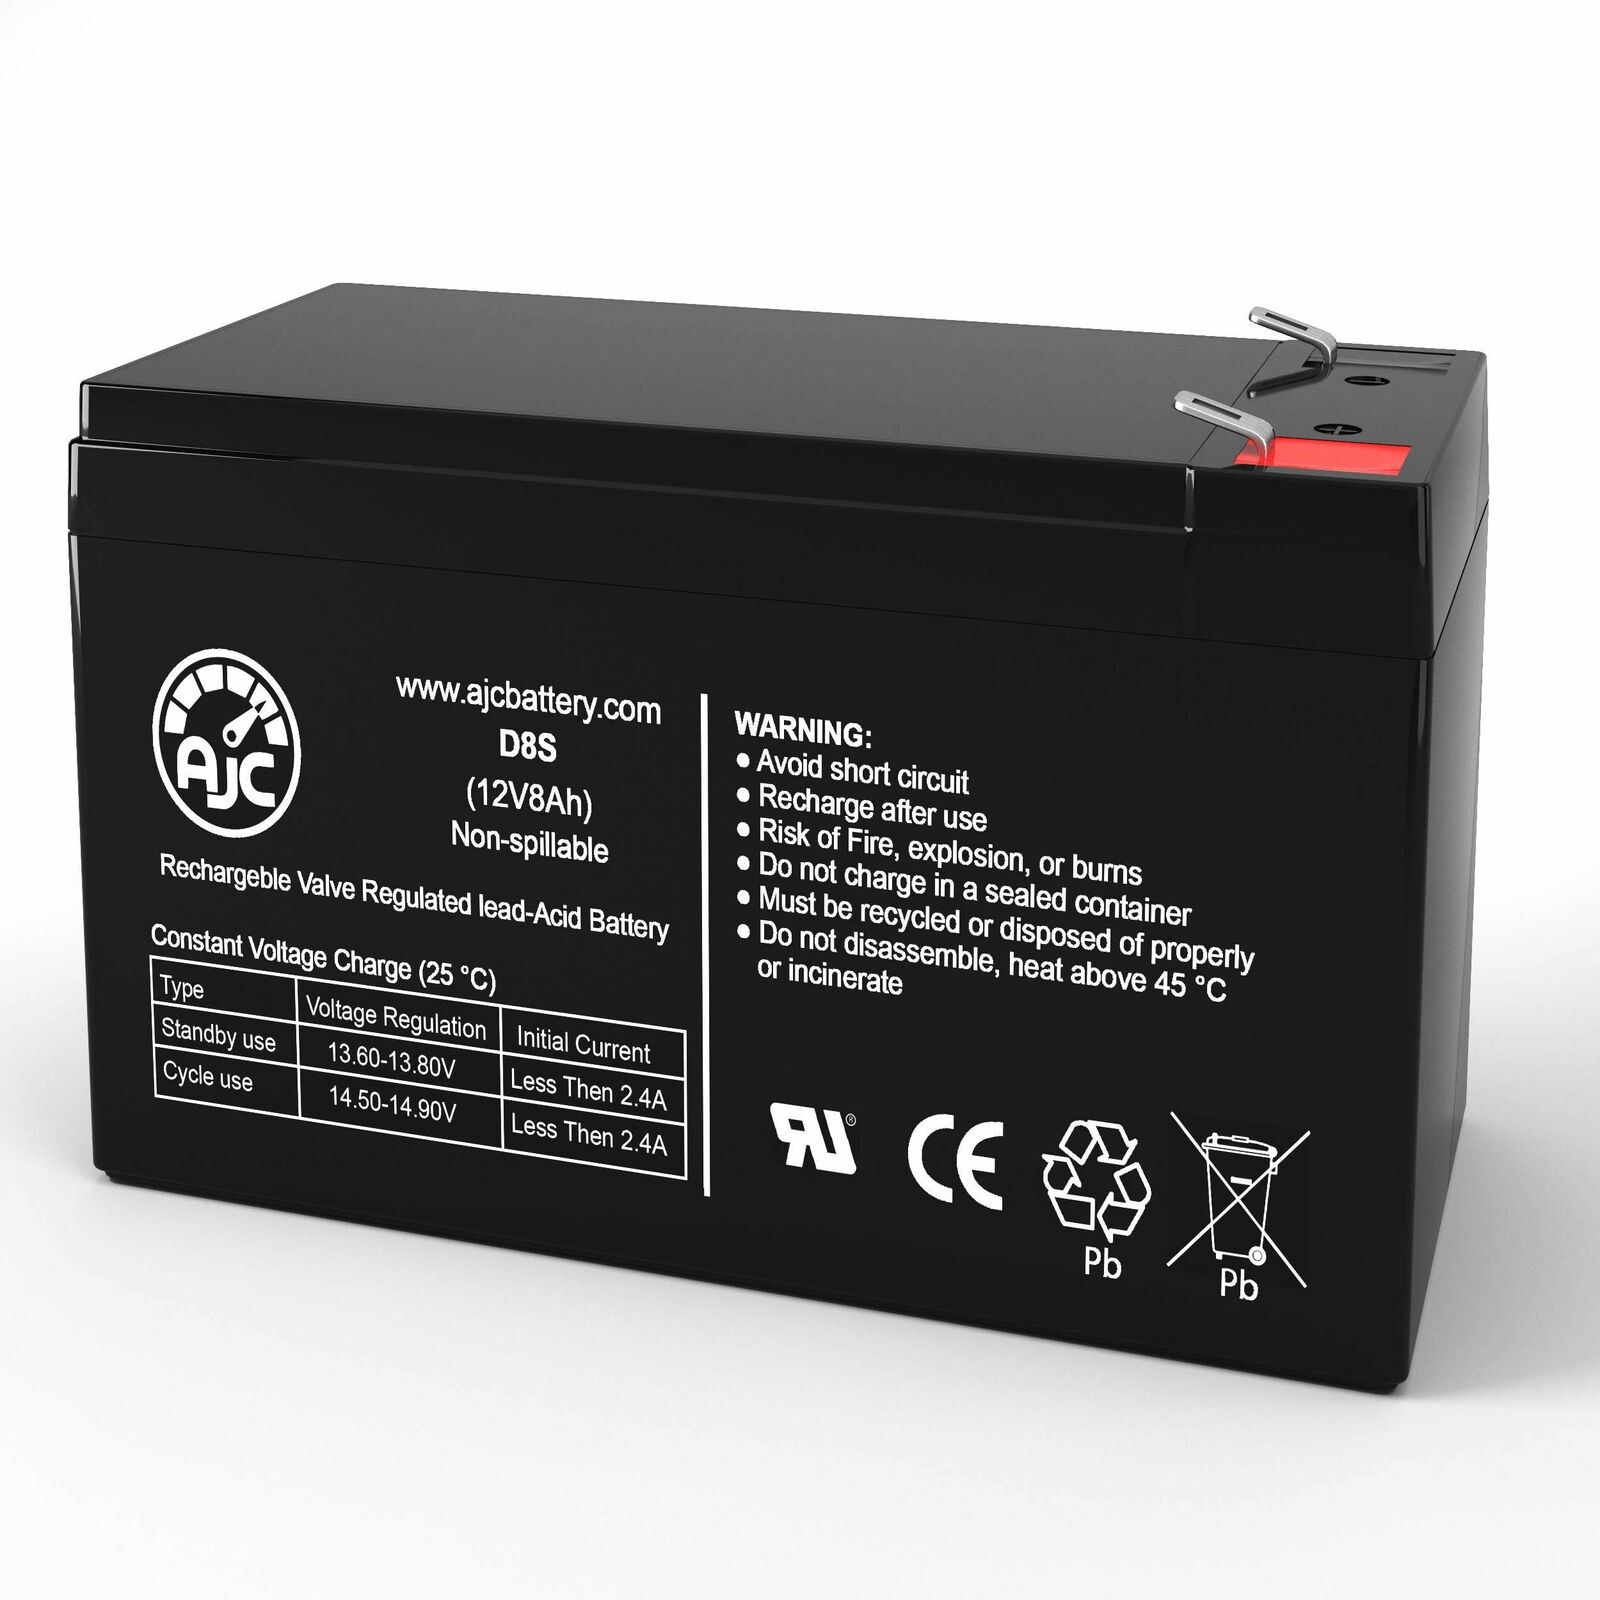 Belkin RG Battery Backup - REV B 12V 8Ah UPS Replacement Battery